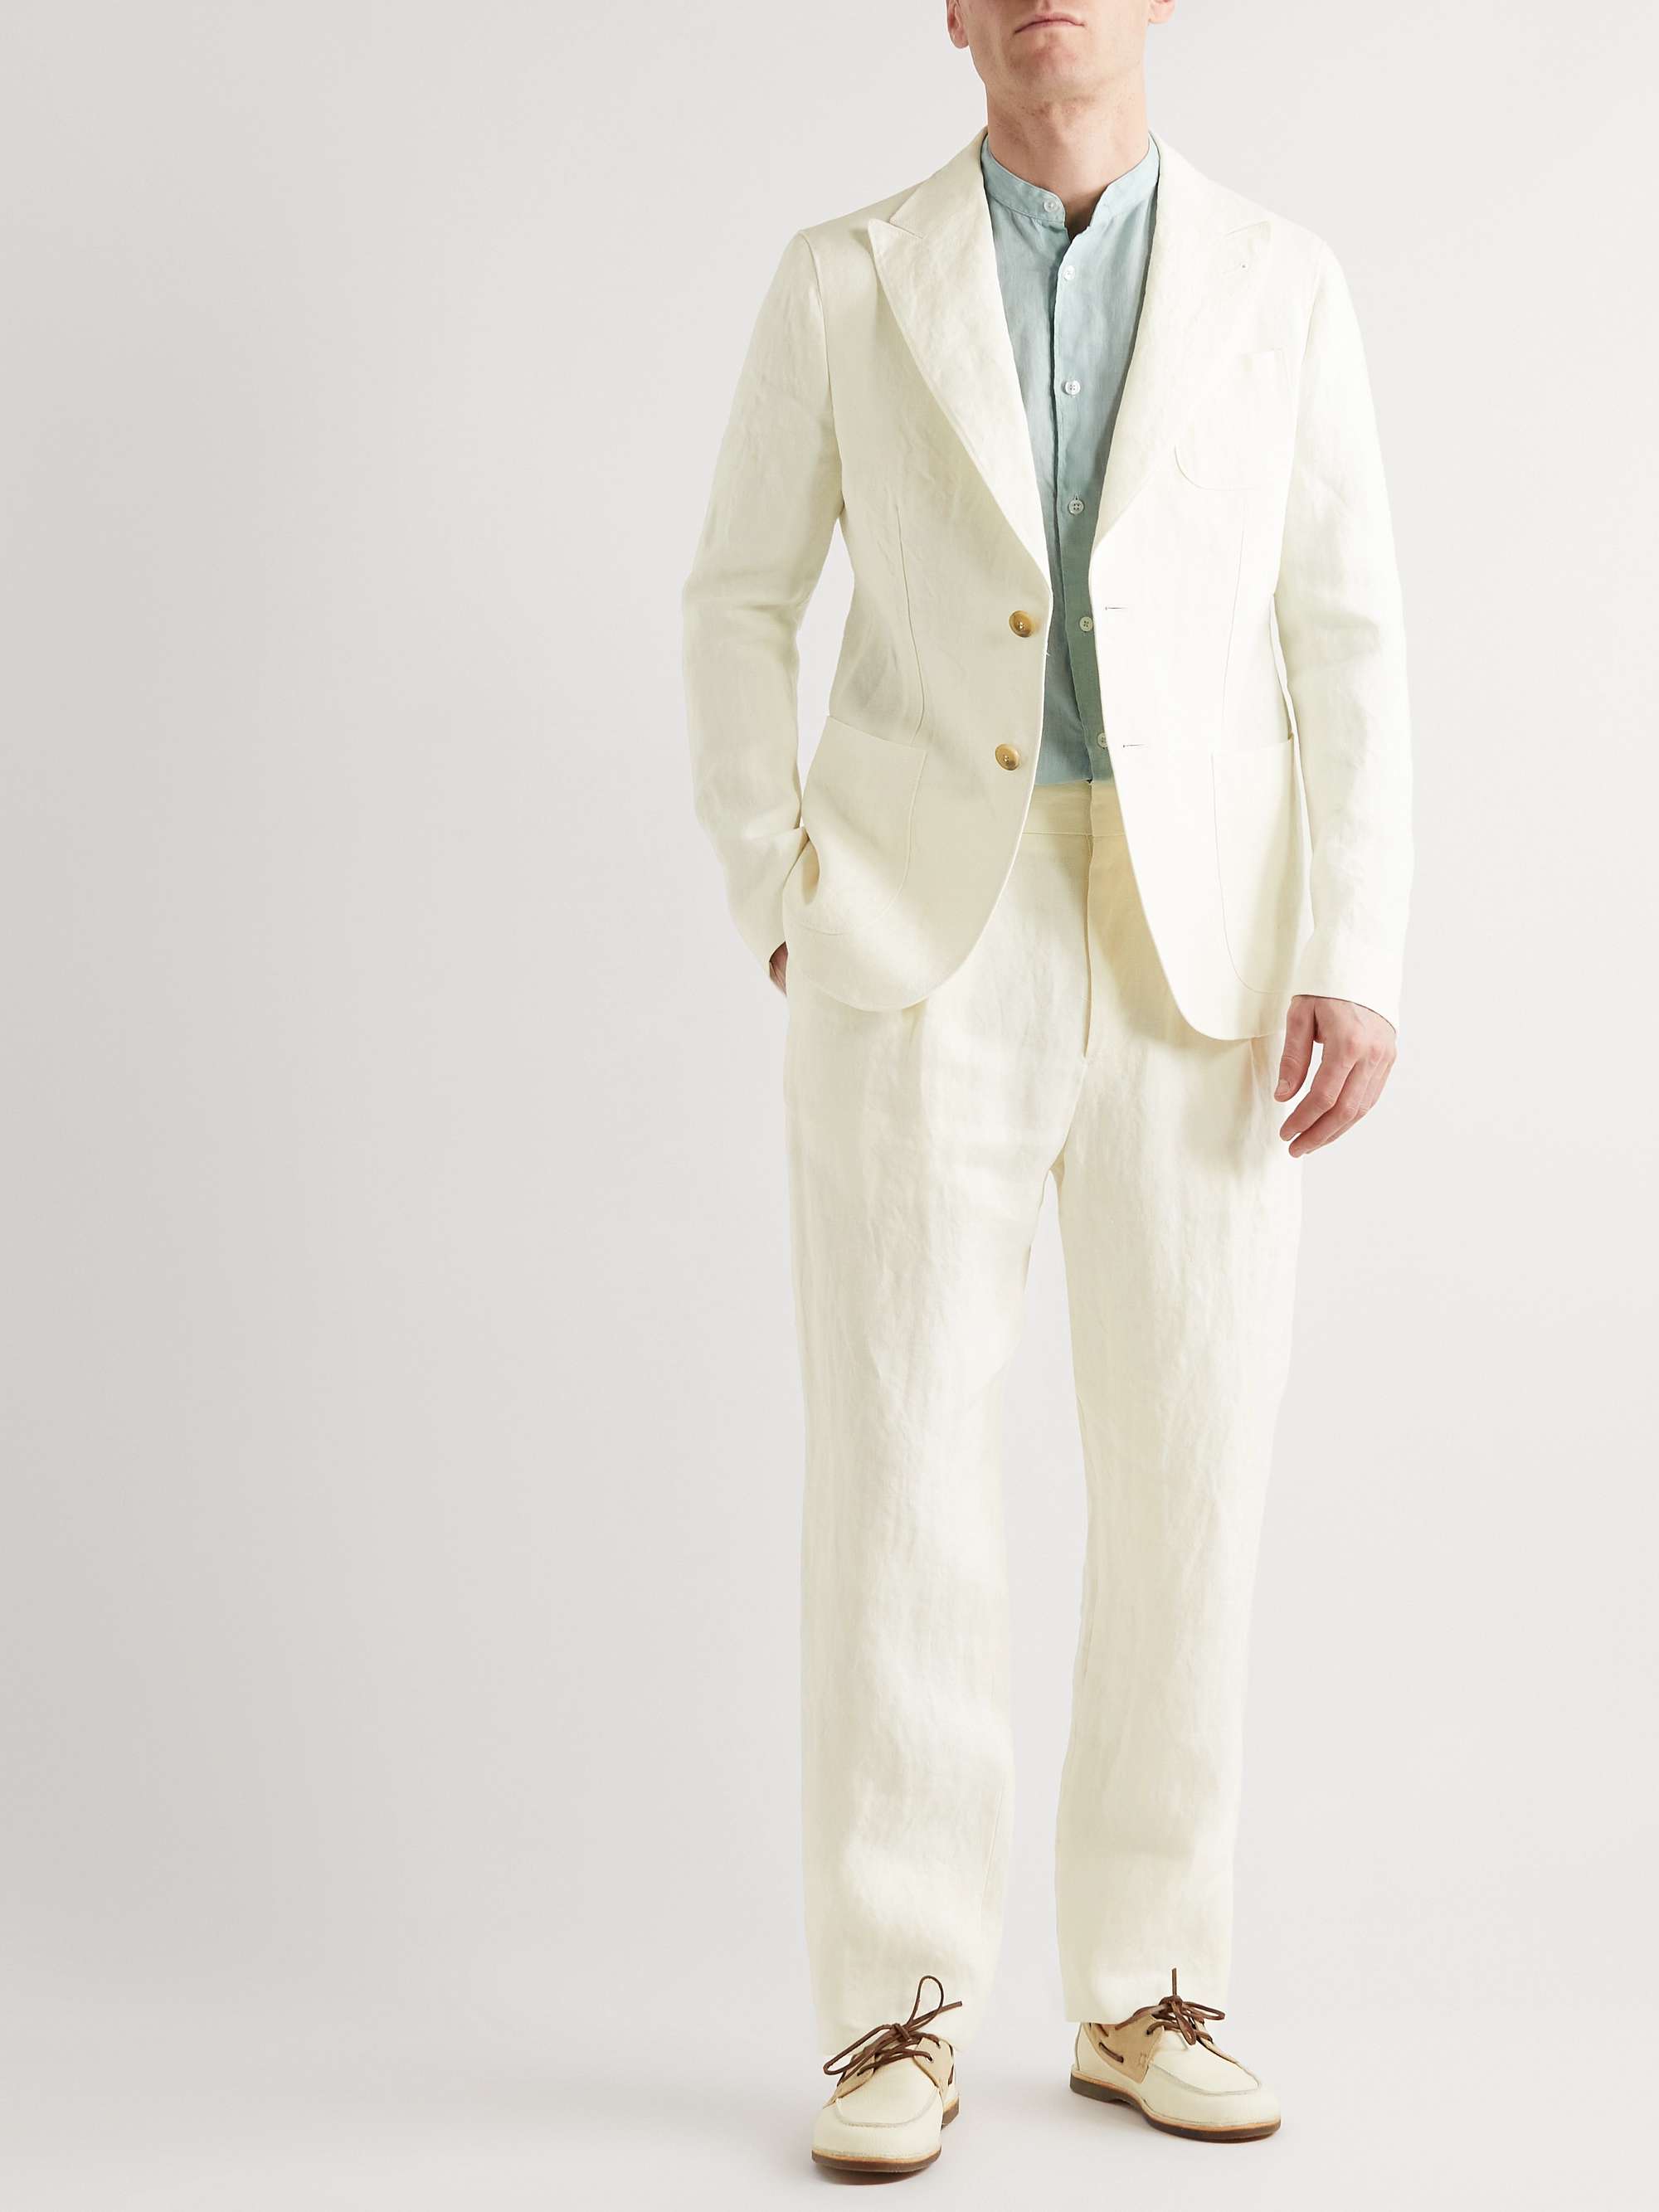 GIORGIO ARMANI Upton Linen Suit Jacket